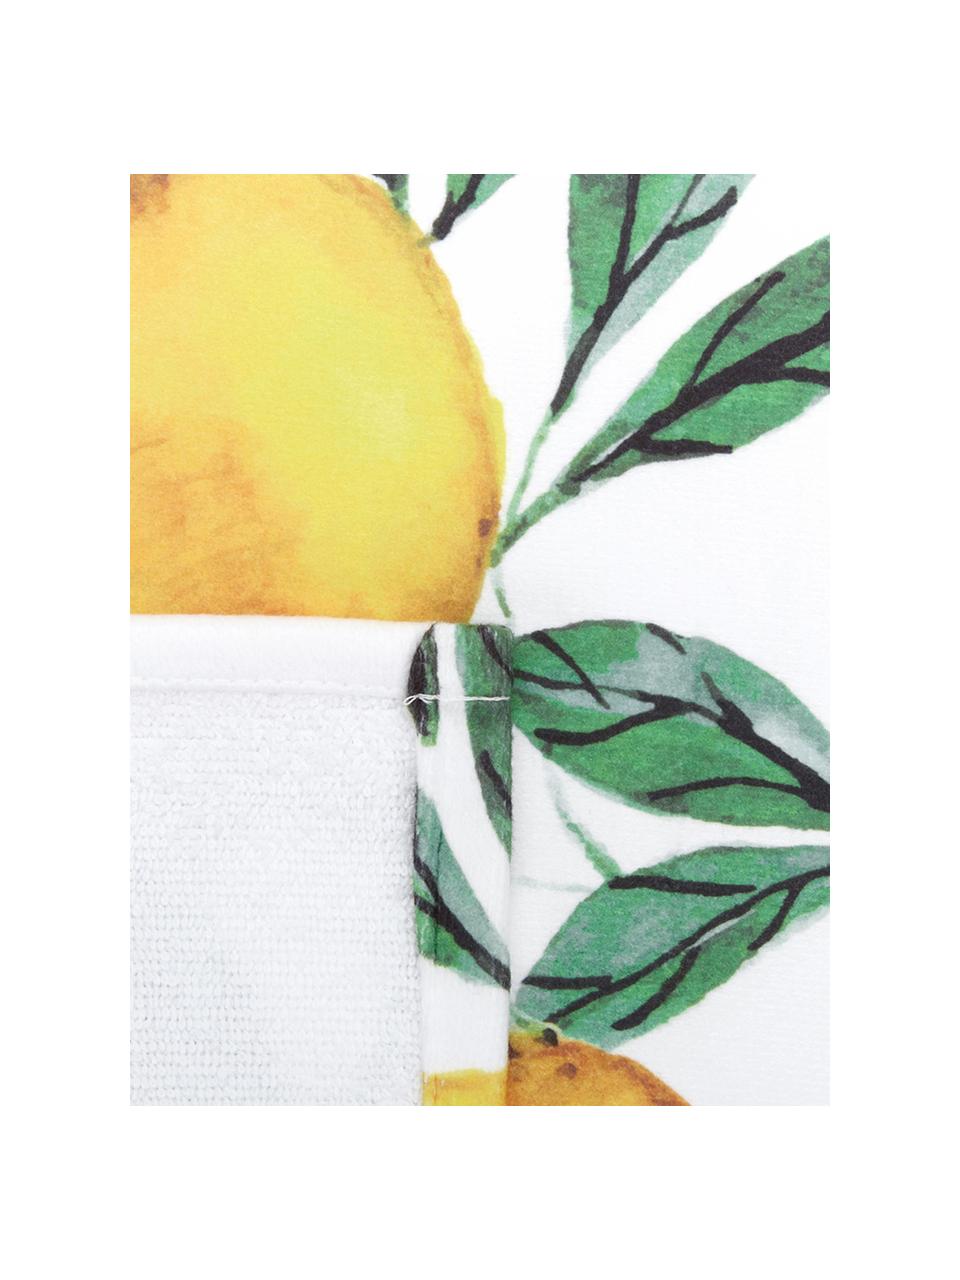 Licht strandlaken Lemon met citroenenprint, 55% polyester, 45% katoen zeer lichte kwaliteit, 340 g/m², Wit, groen, geel, B 70 x L 150 cm